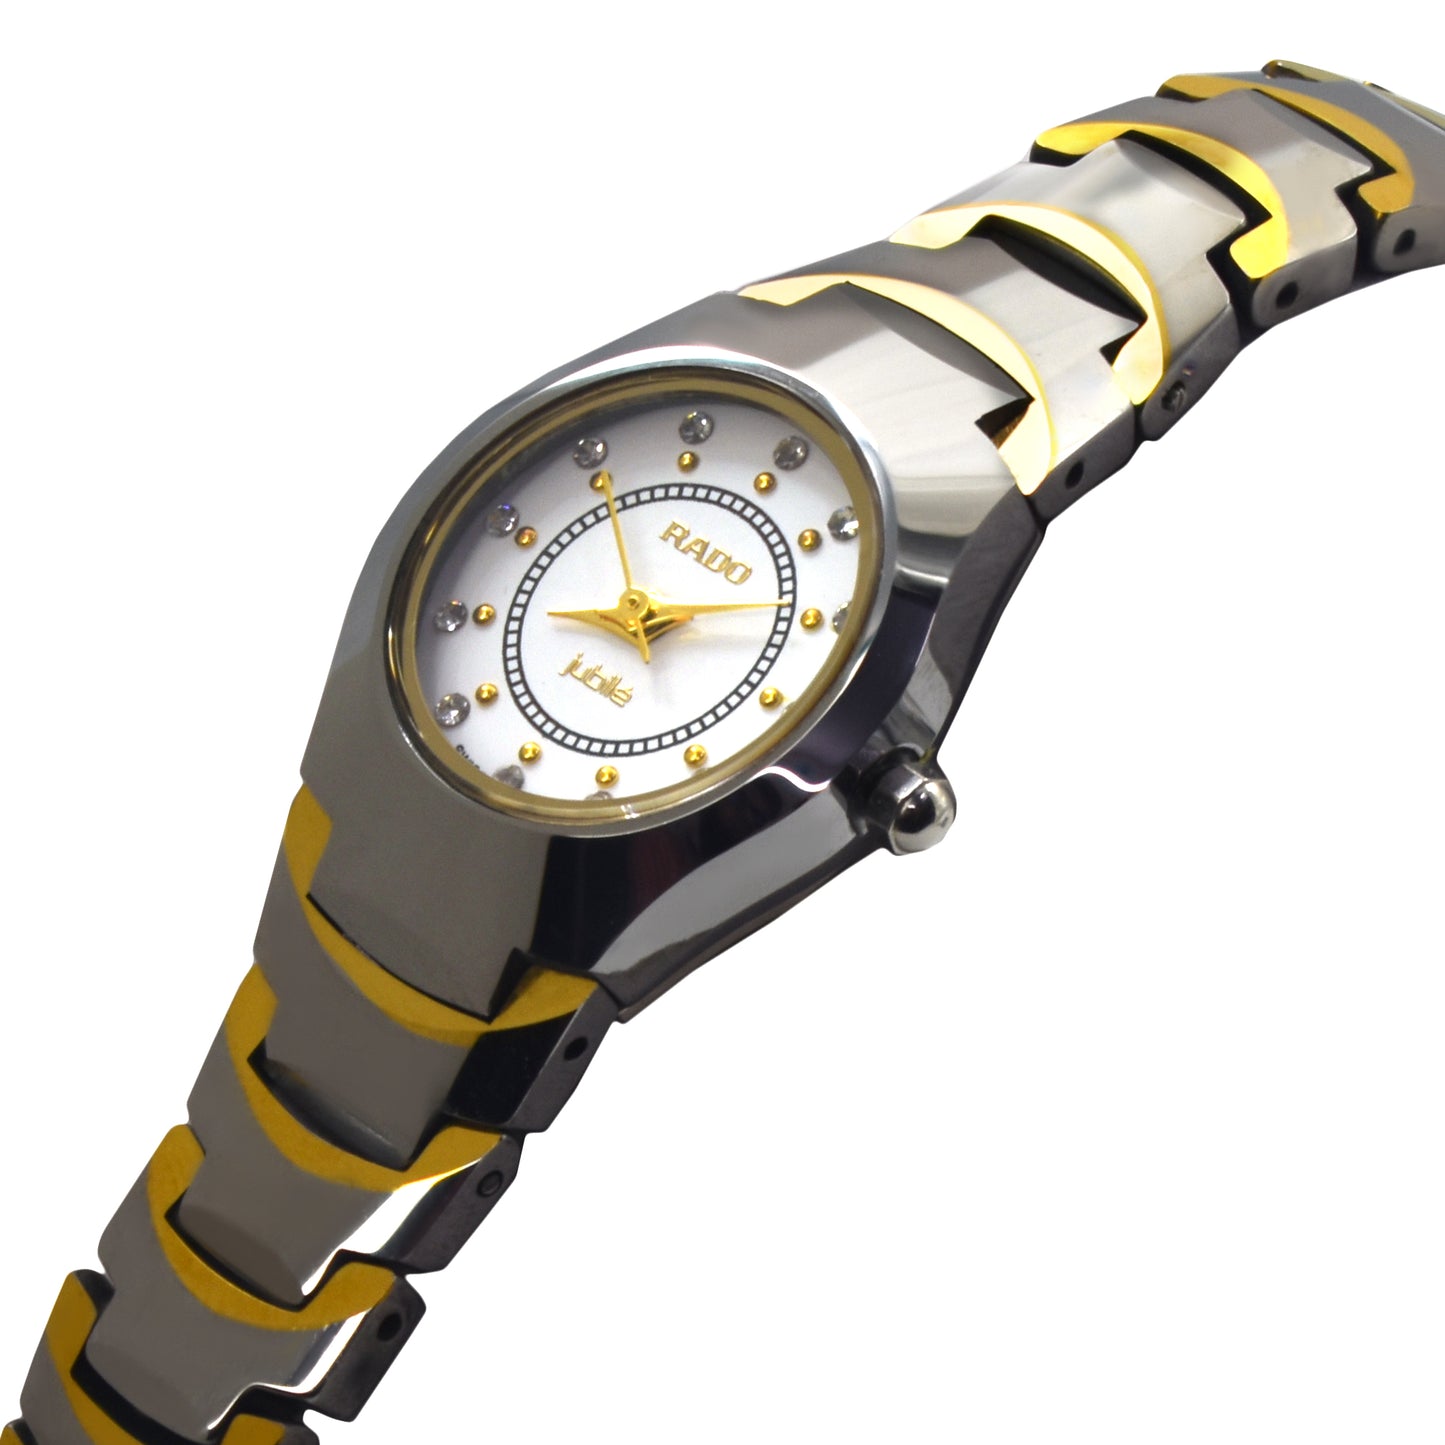 Premium Quality Watch For Women | RAD L Watch 1001